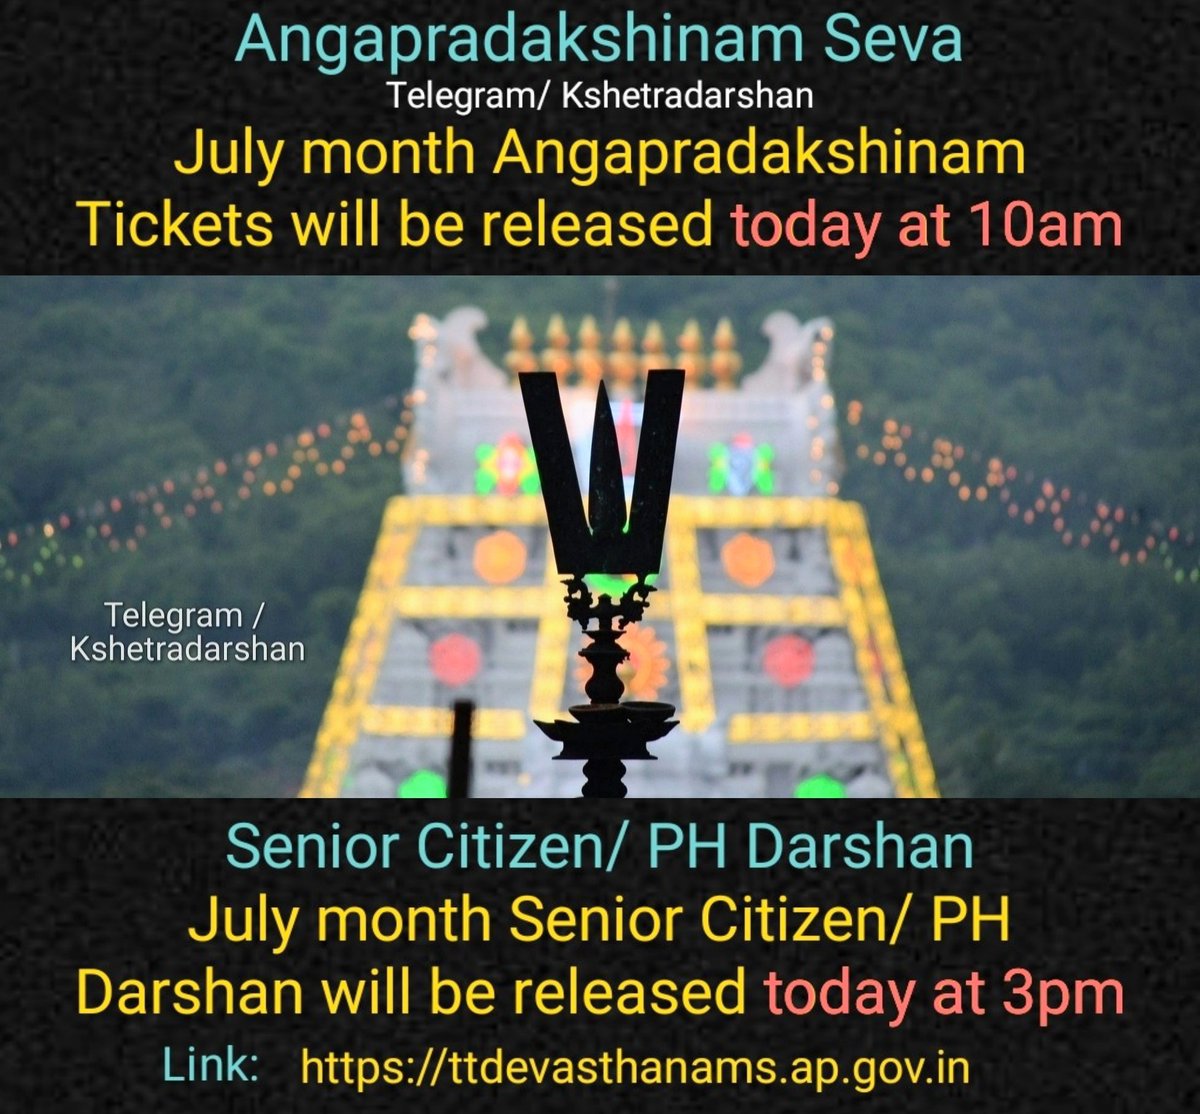 #Angapradakshinam
July month Angapradakshinam Tickets will be released today at 10am

#SeniorCitizen
July month Senior Citizen/ PH Darshan will be released today at 3pm

Link:
ttdevasthanams.ap.gov.in